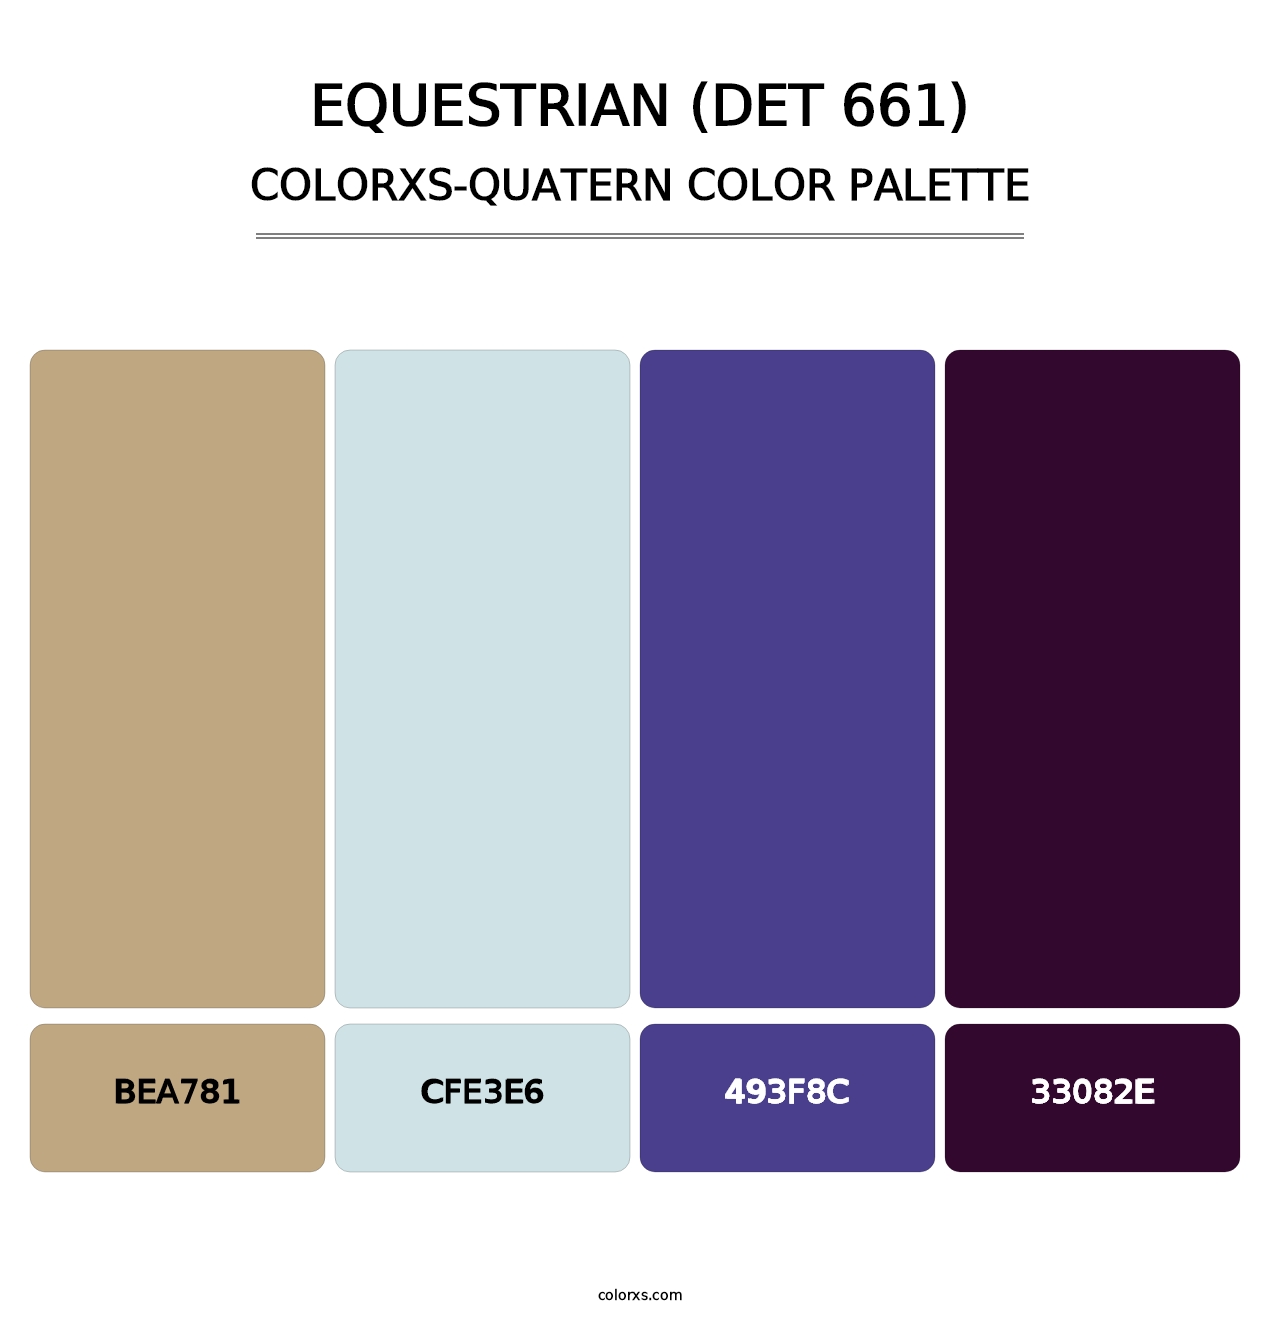 Equestrian (DET 661) - Colorxs Quatern Palette